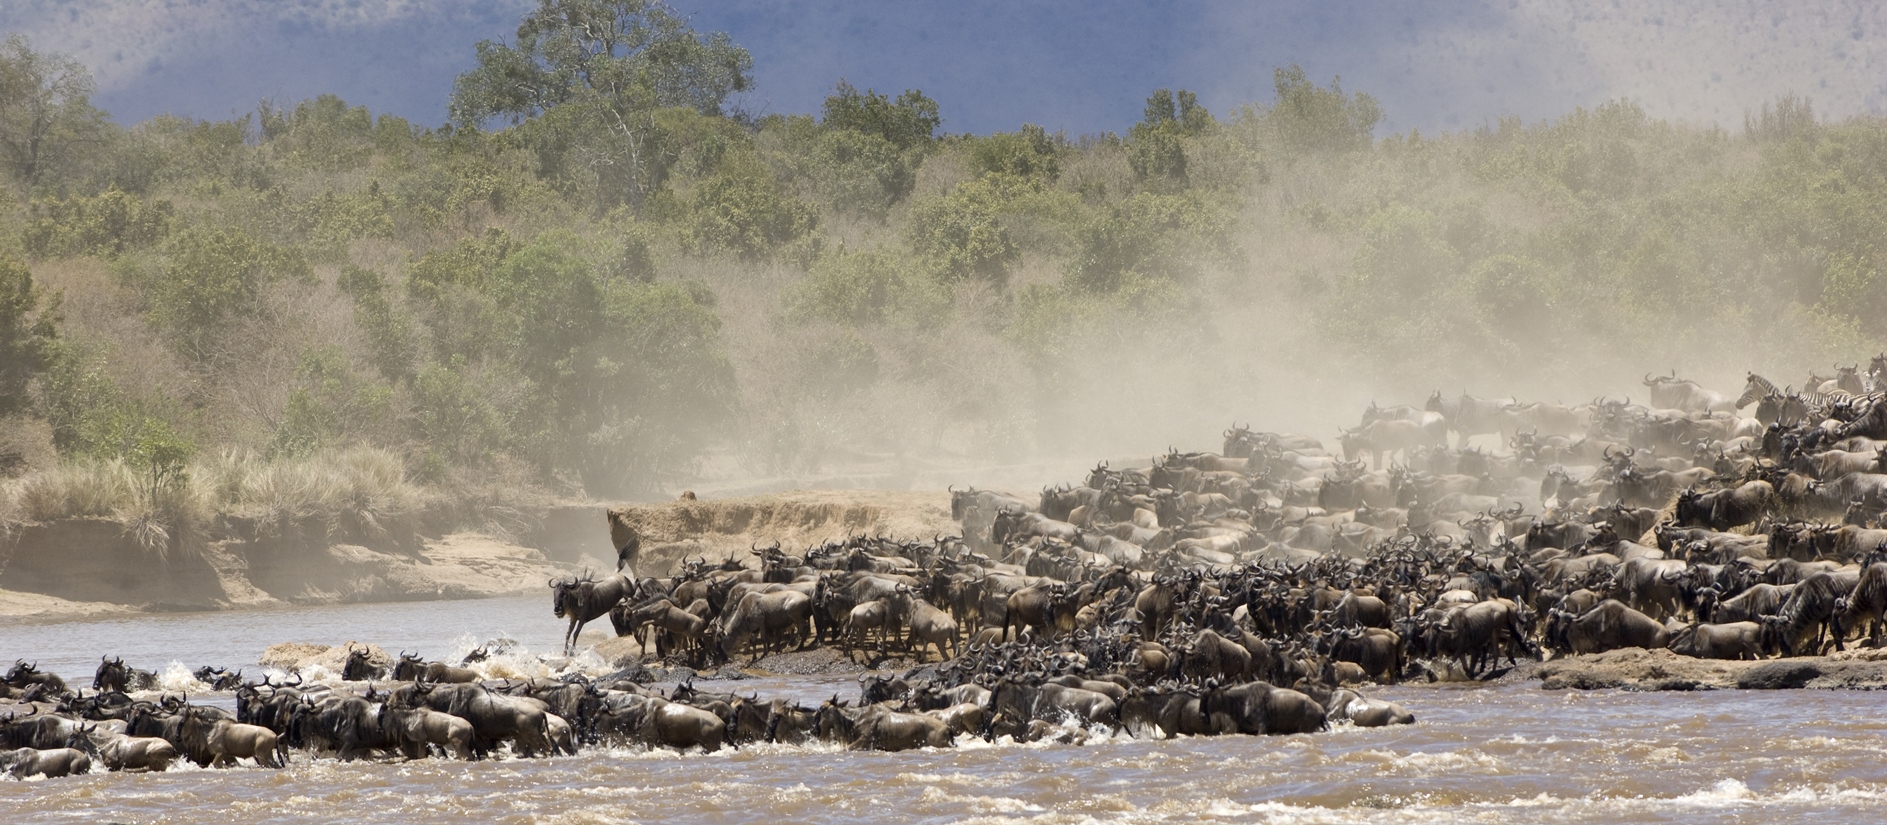 Wildebeest in the Masai Mara